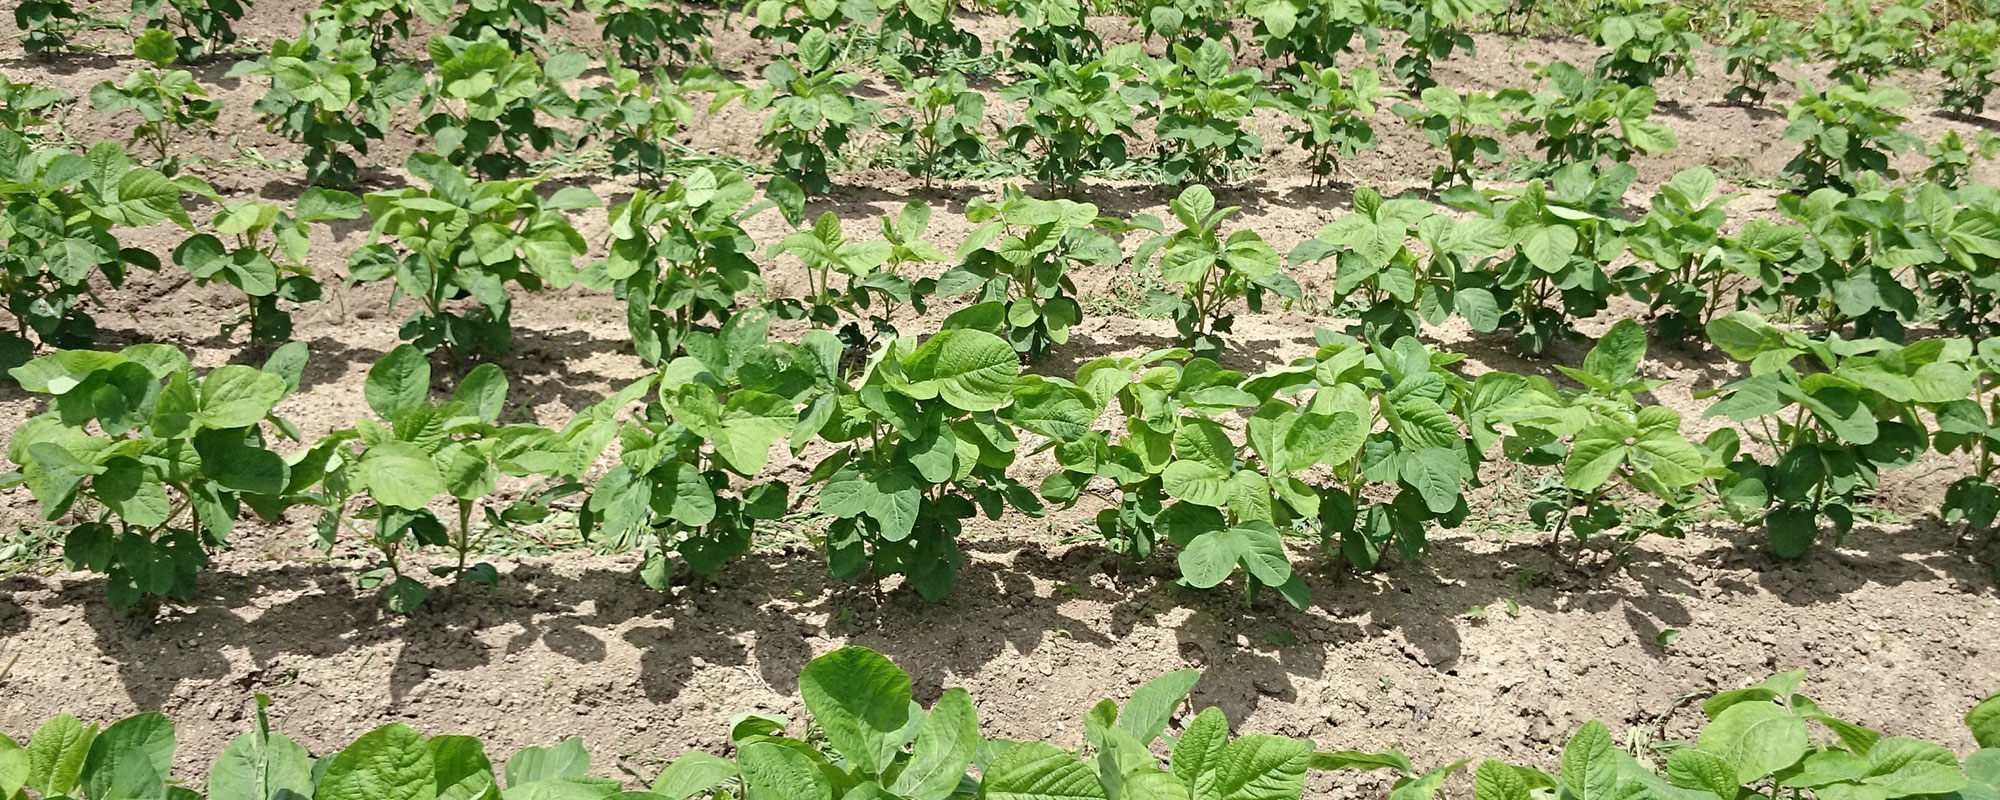 大豆の無農薬栽培